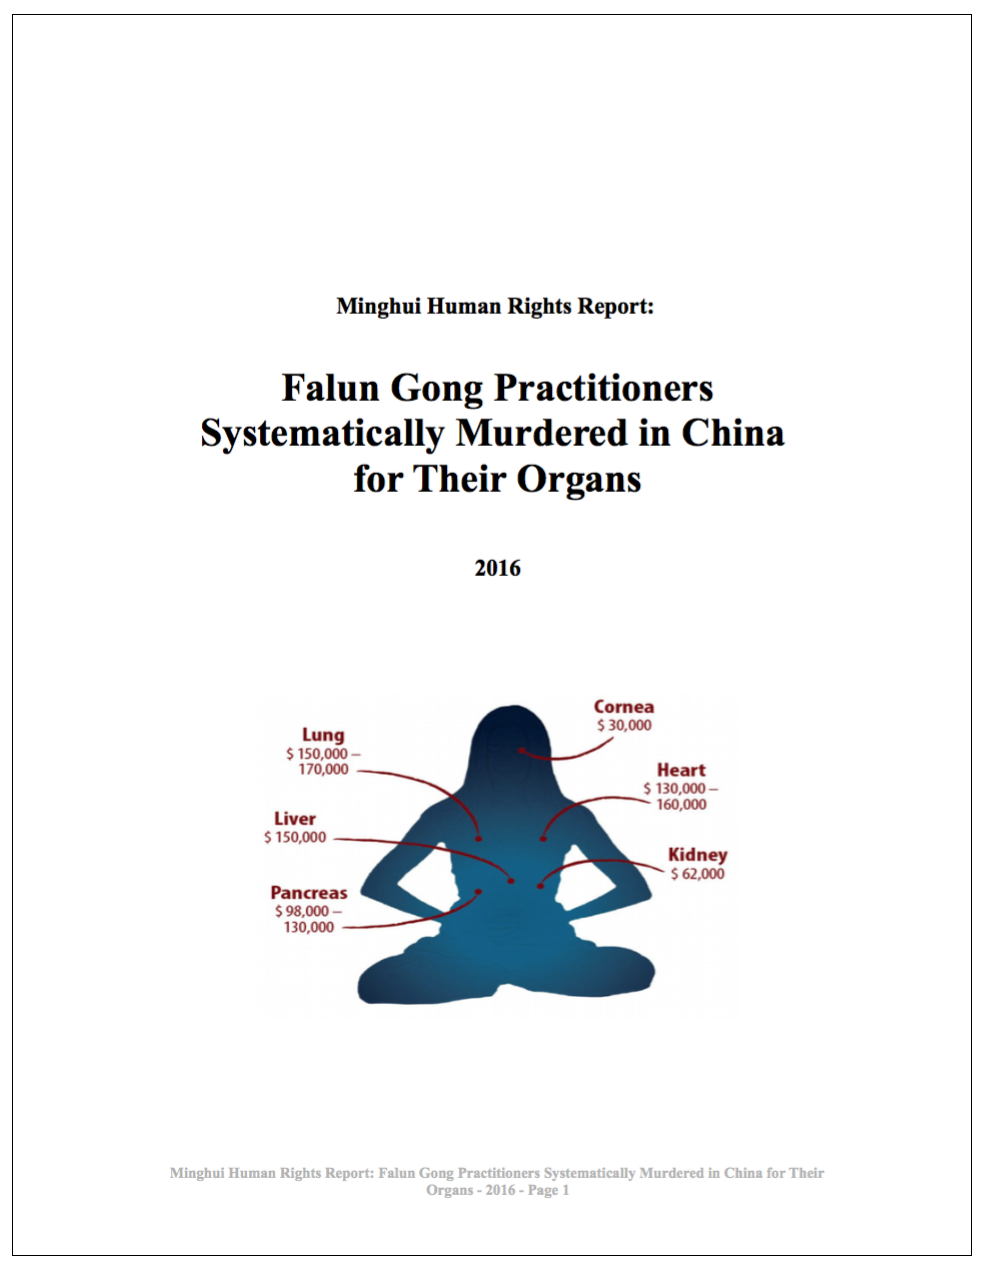 FalunGongMurderedForOrgans-MinghuiReport-2016